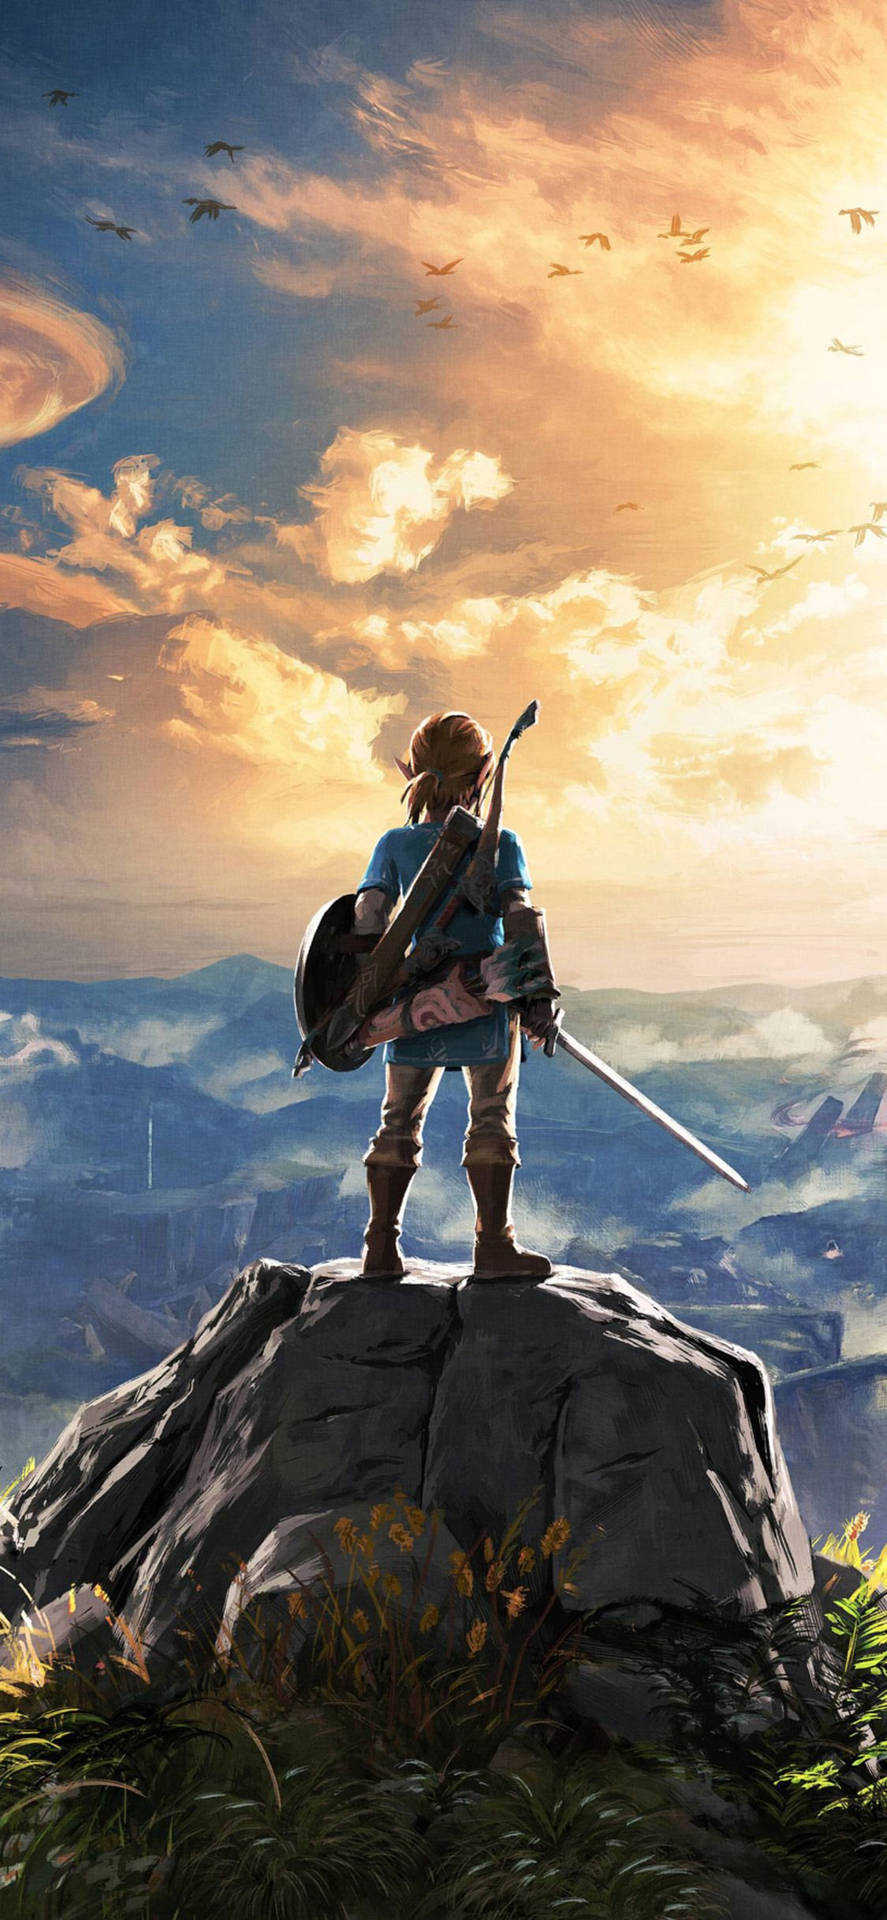 Journey with Link Across Hyrule in The Legend of Zelda: Breath of the Wild Wallpaper